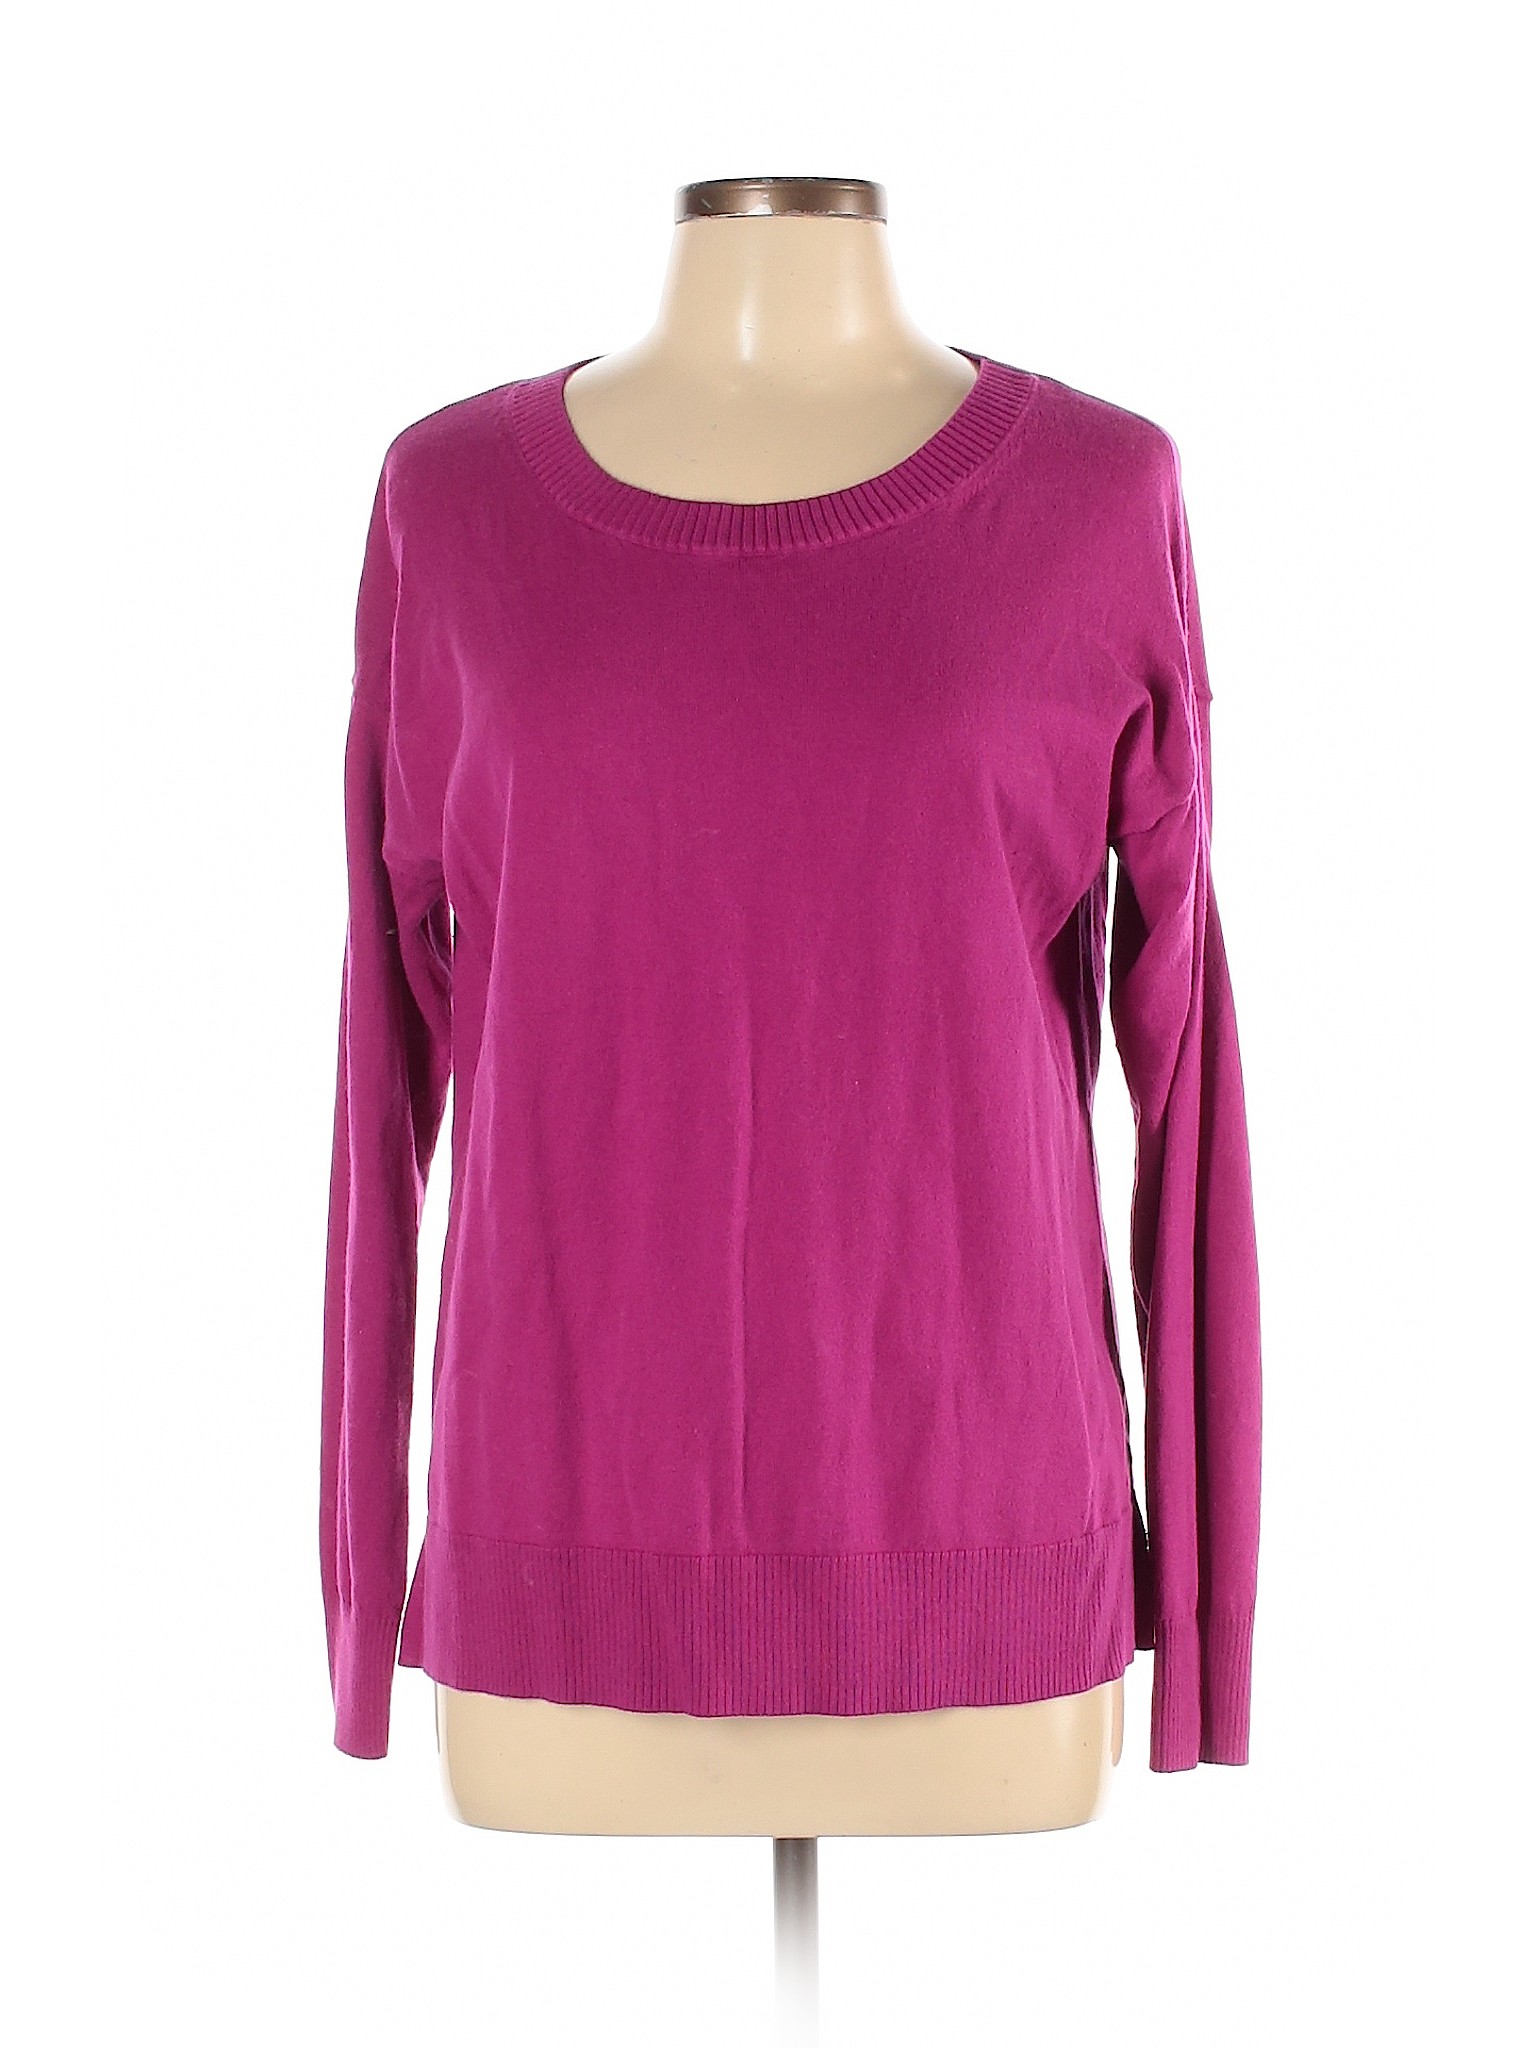 Gap Outlet Women Pink Pullover Sweater L | eBay